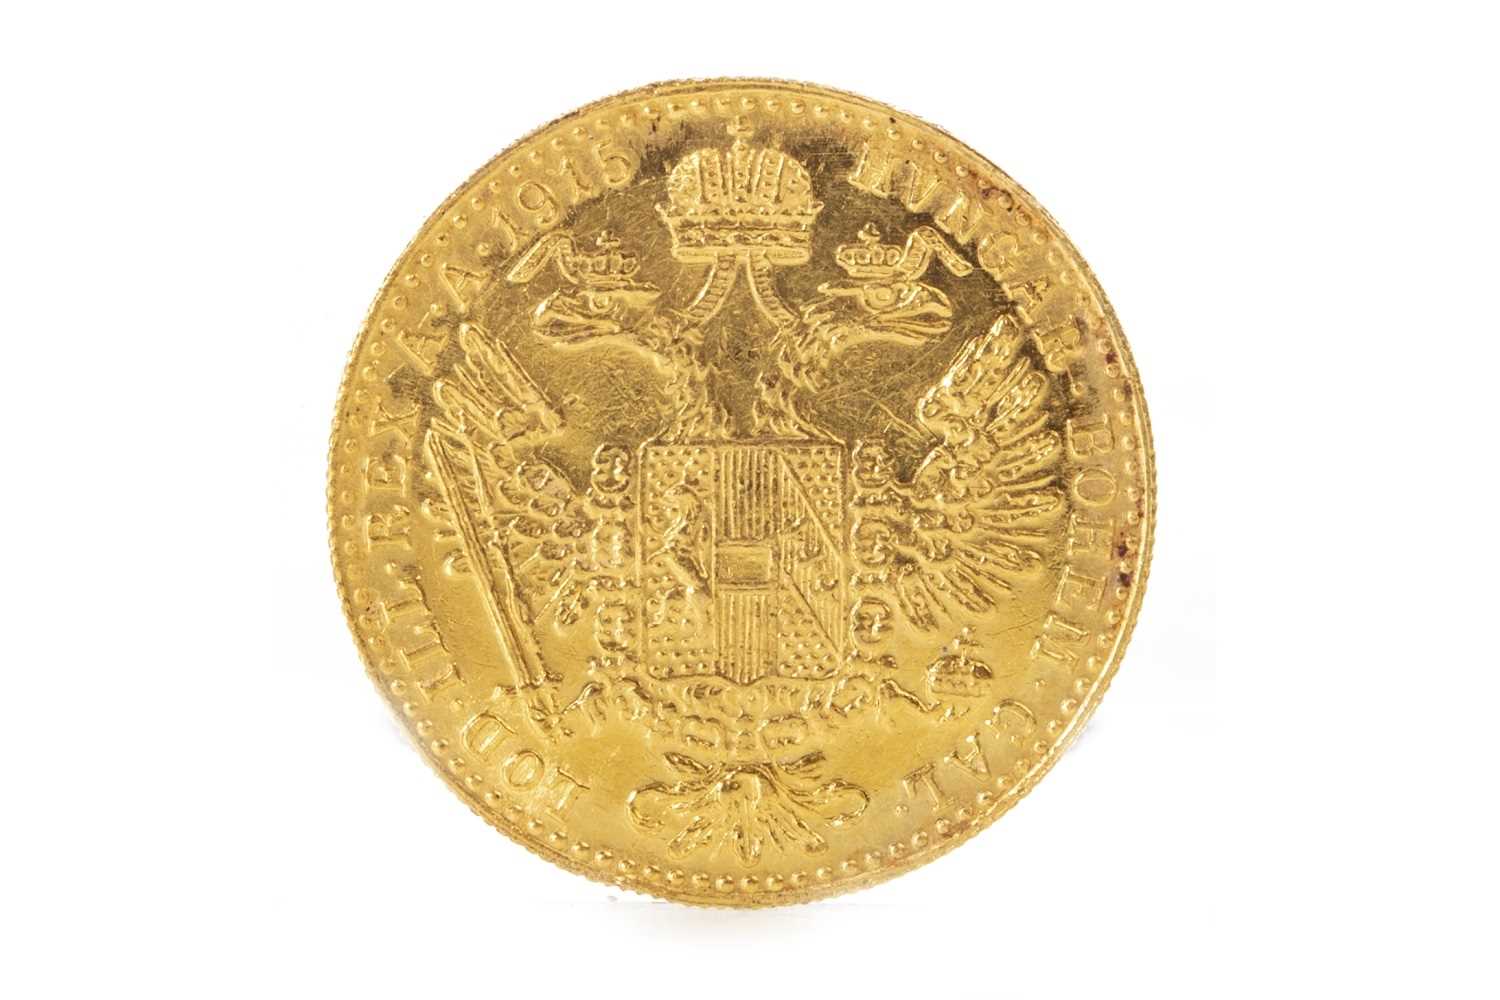 Lot 509 - A GOLD AUSTRIAN COIN DATED 1915